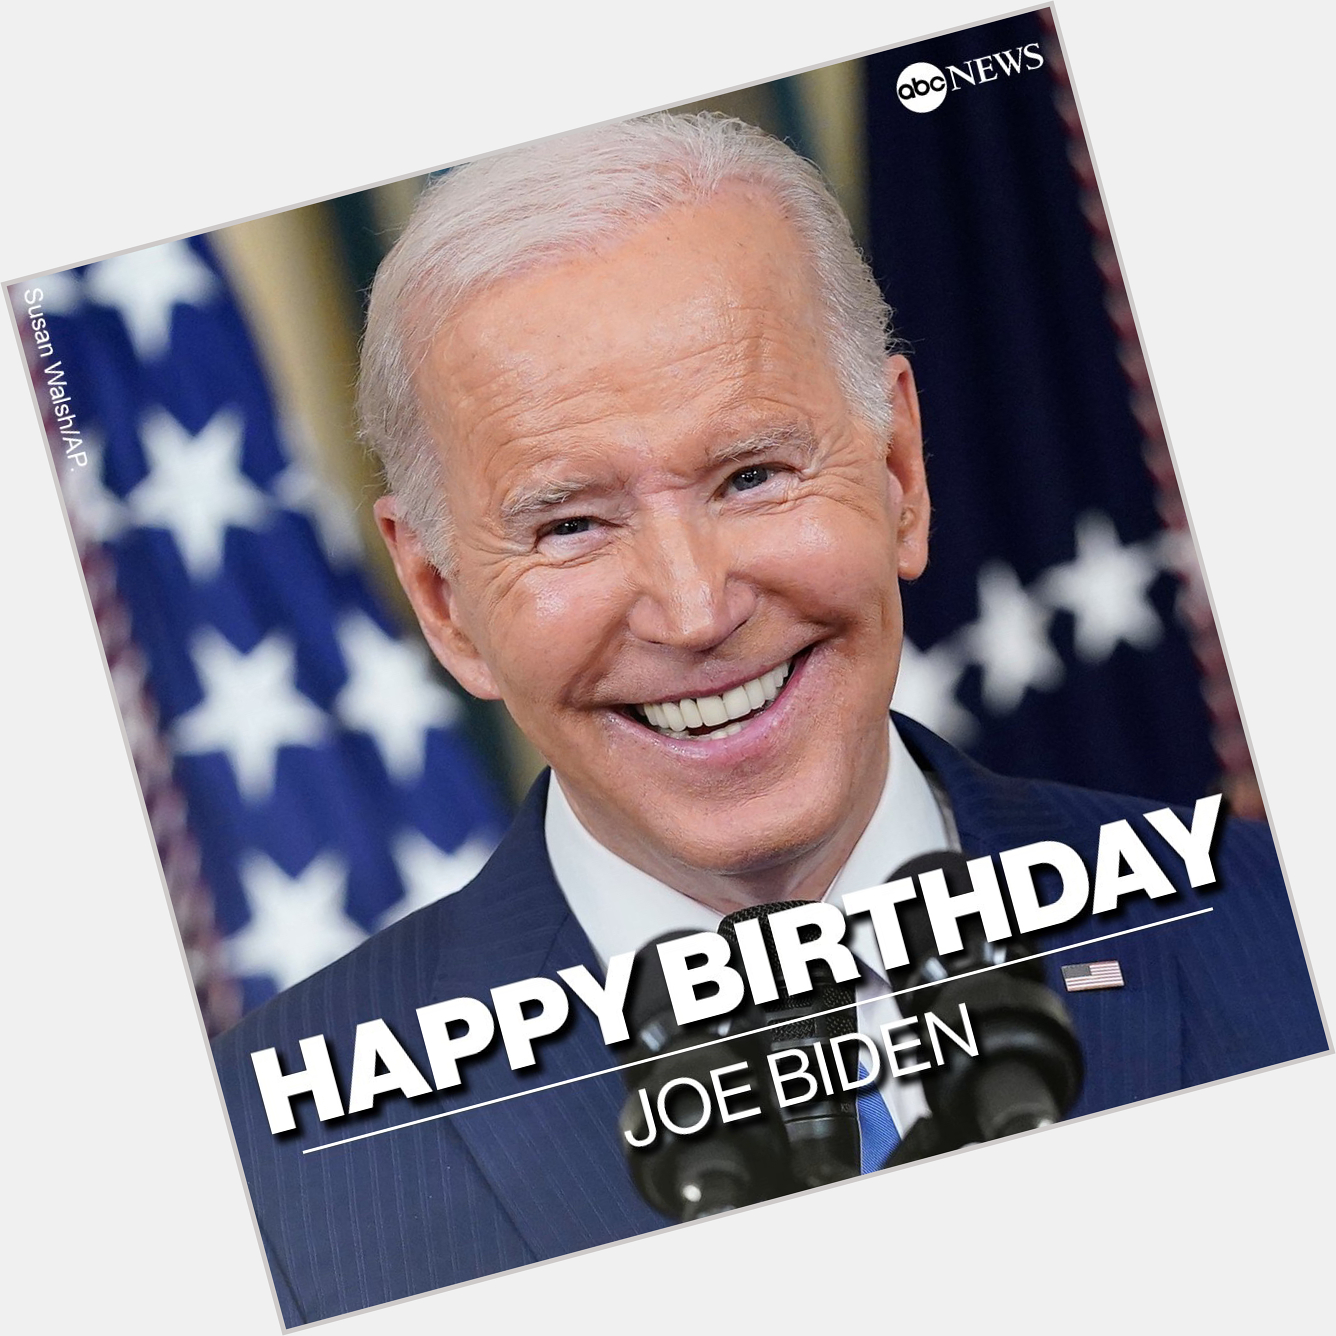 Happy birthday President Joe Biden who turns 80! 